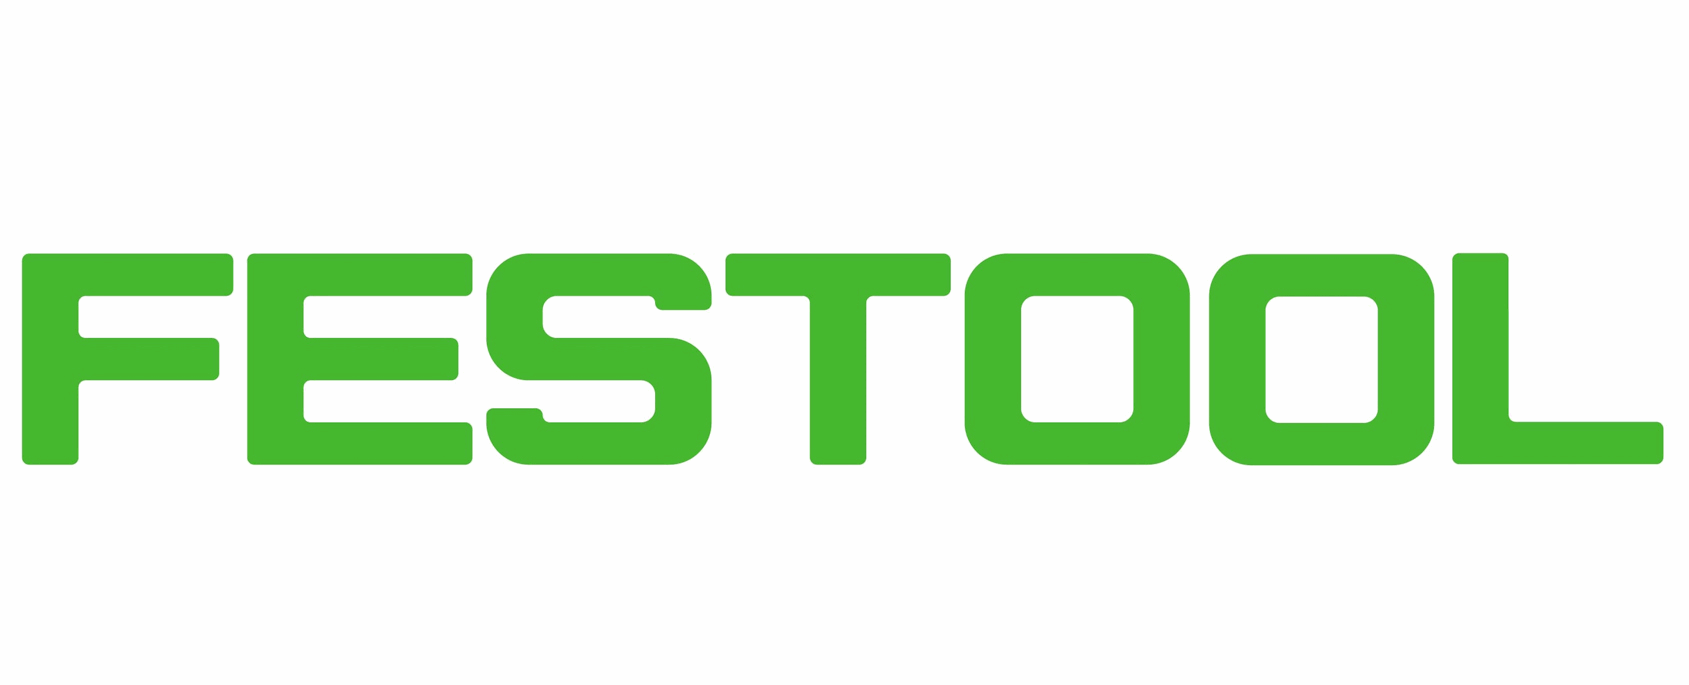 Festool Logo - FESTOOL | About | Archiproducts